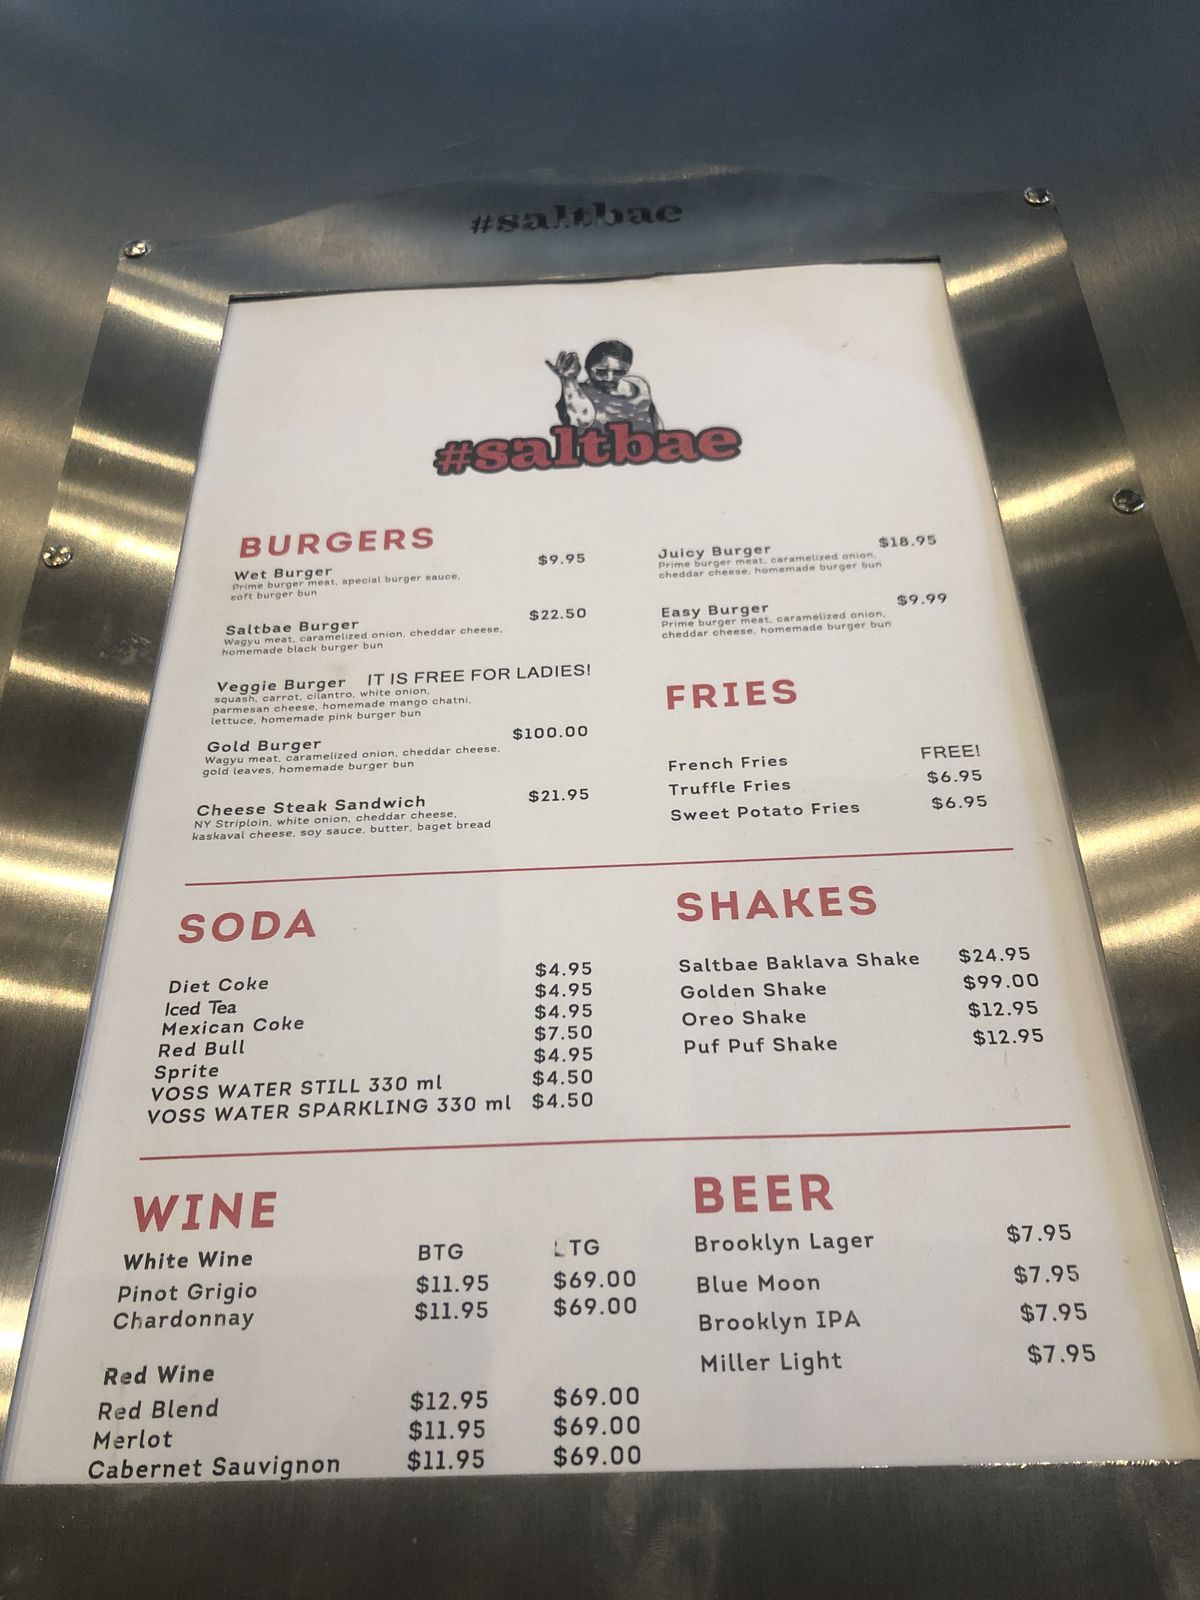 The menu at Salt Bae’s new burger restaurant